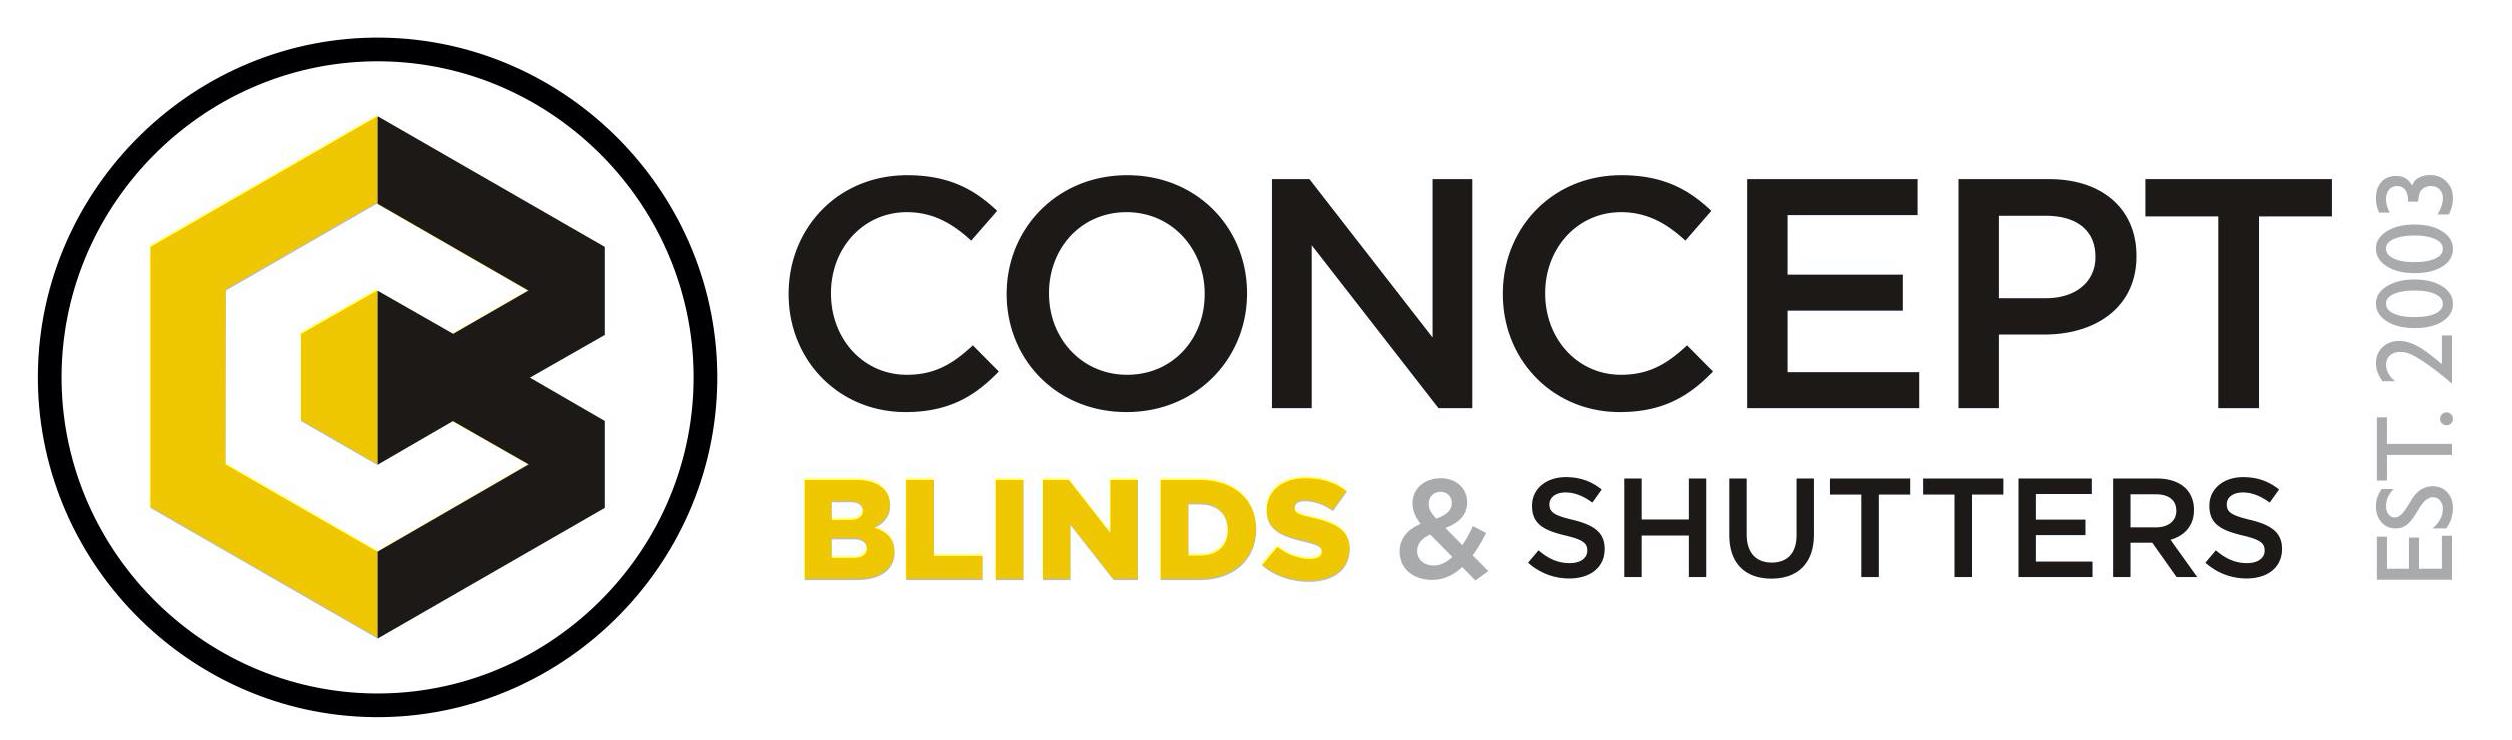 Concept Blinds & Shutters Light Logo